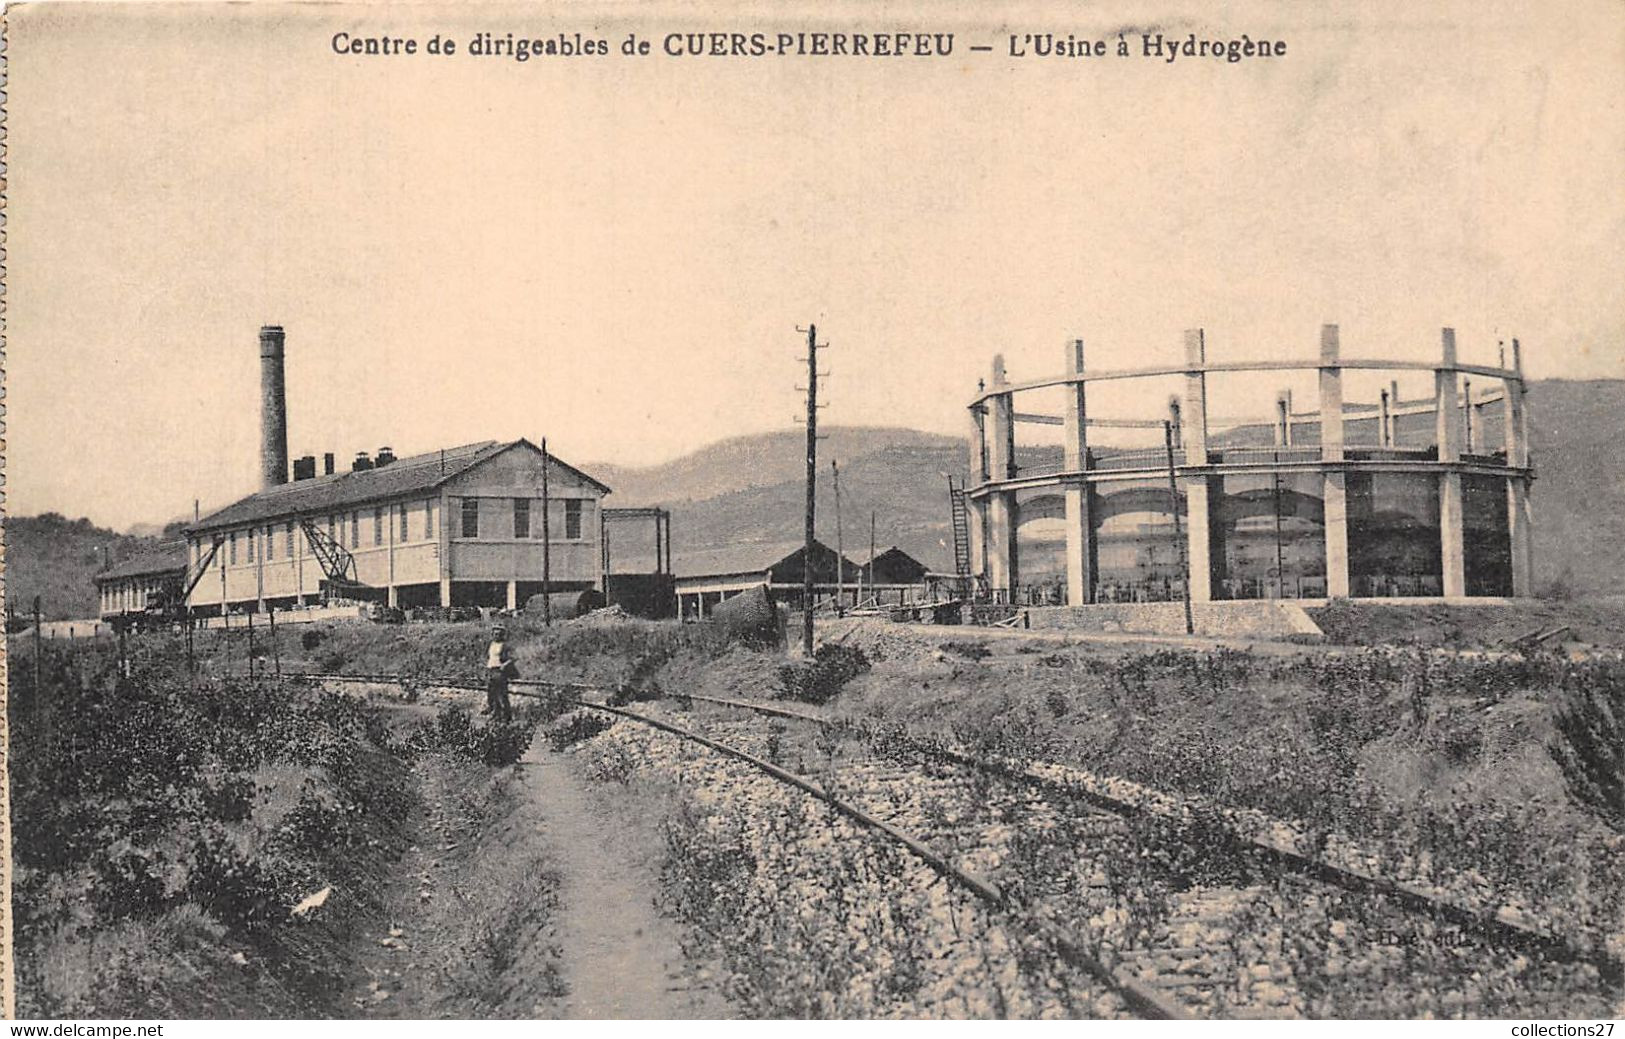 83-CUERS-PIERREFEU- CENTRE DE DIRIGEABLES DE CUERS PIERREFEU- L'USINE A HYDROGENE - Cuers